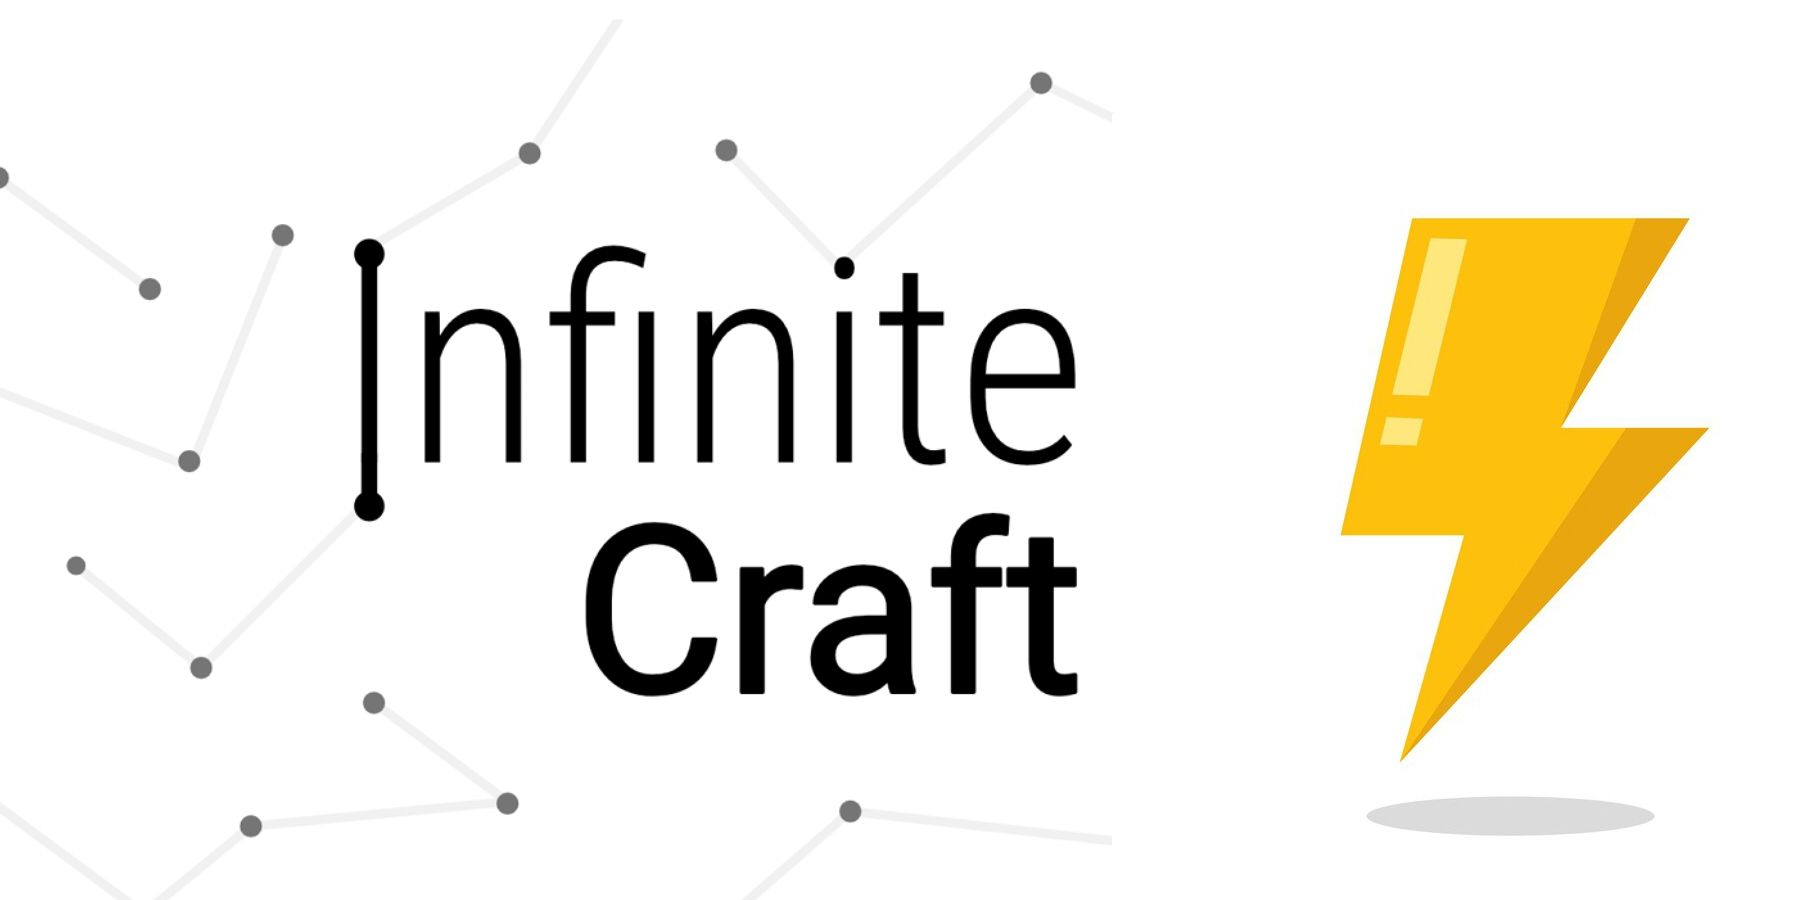 Infinite craft energy